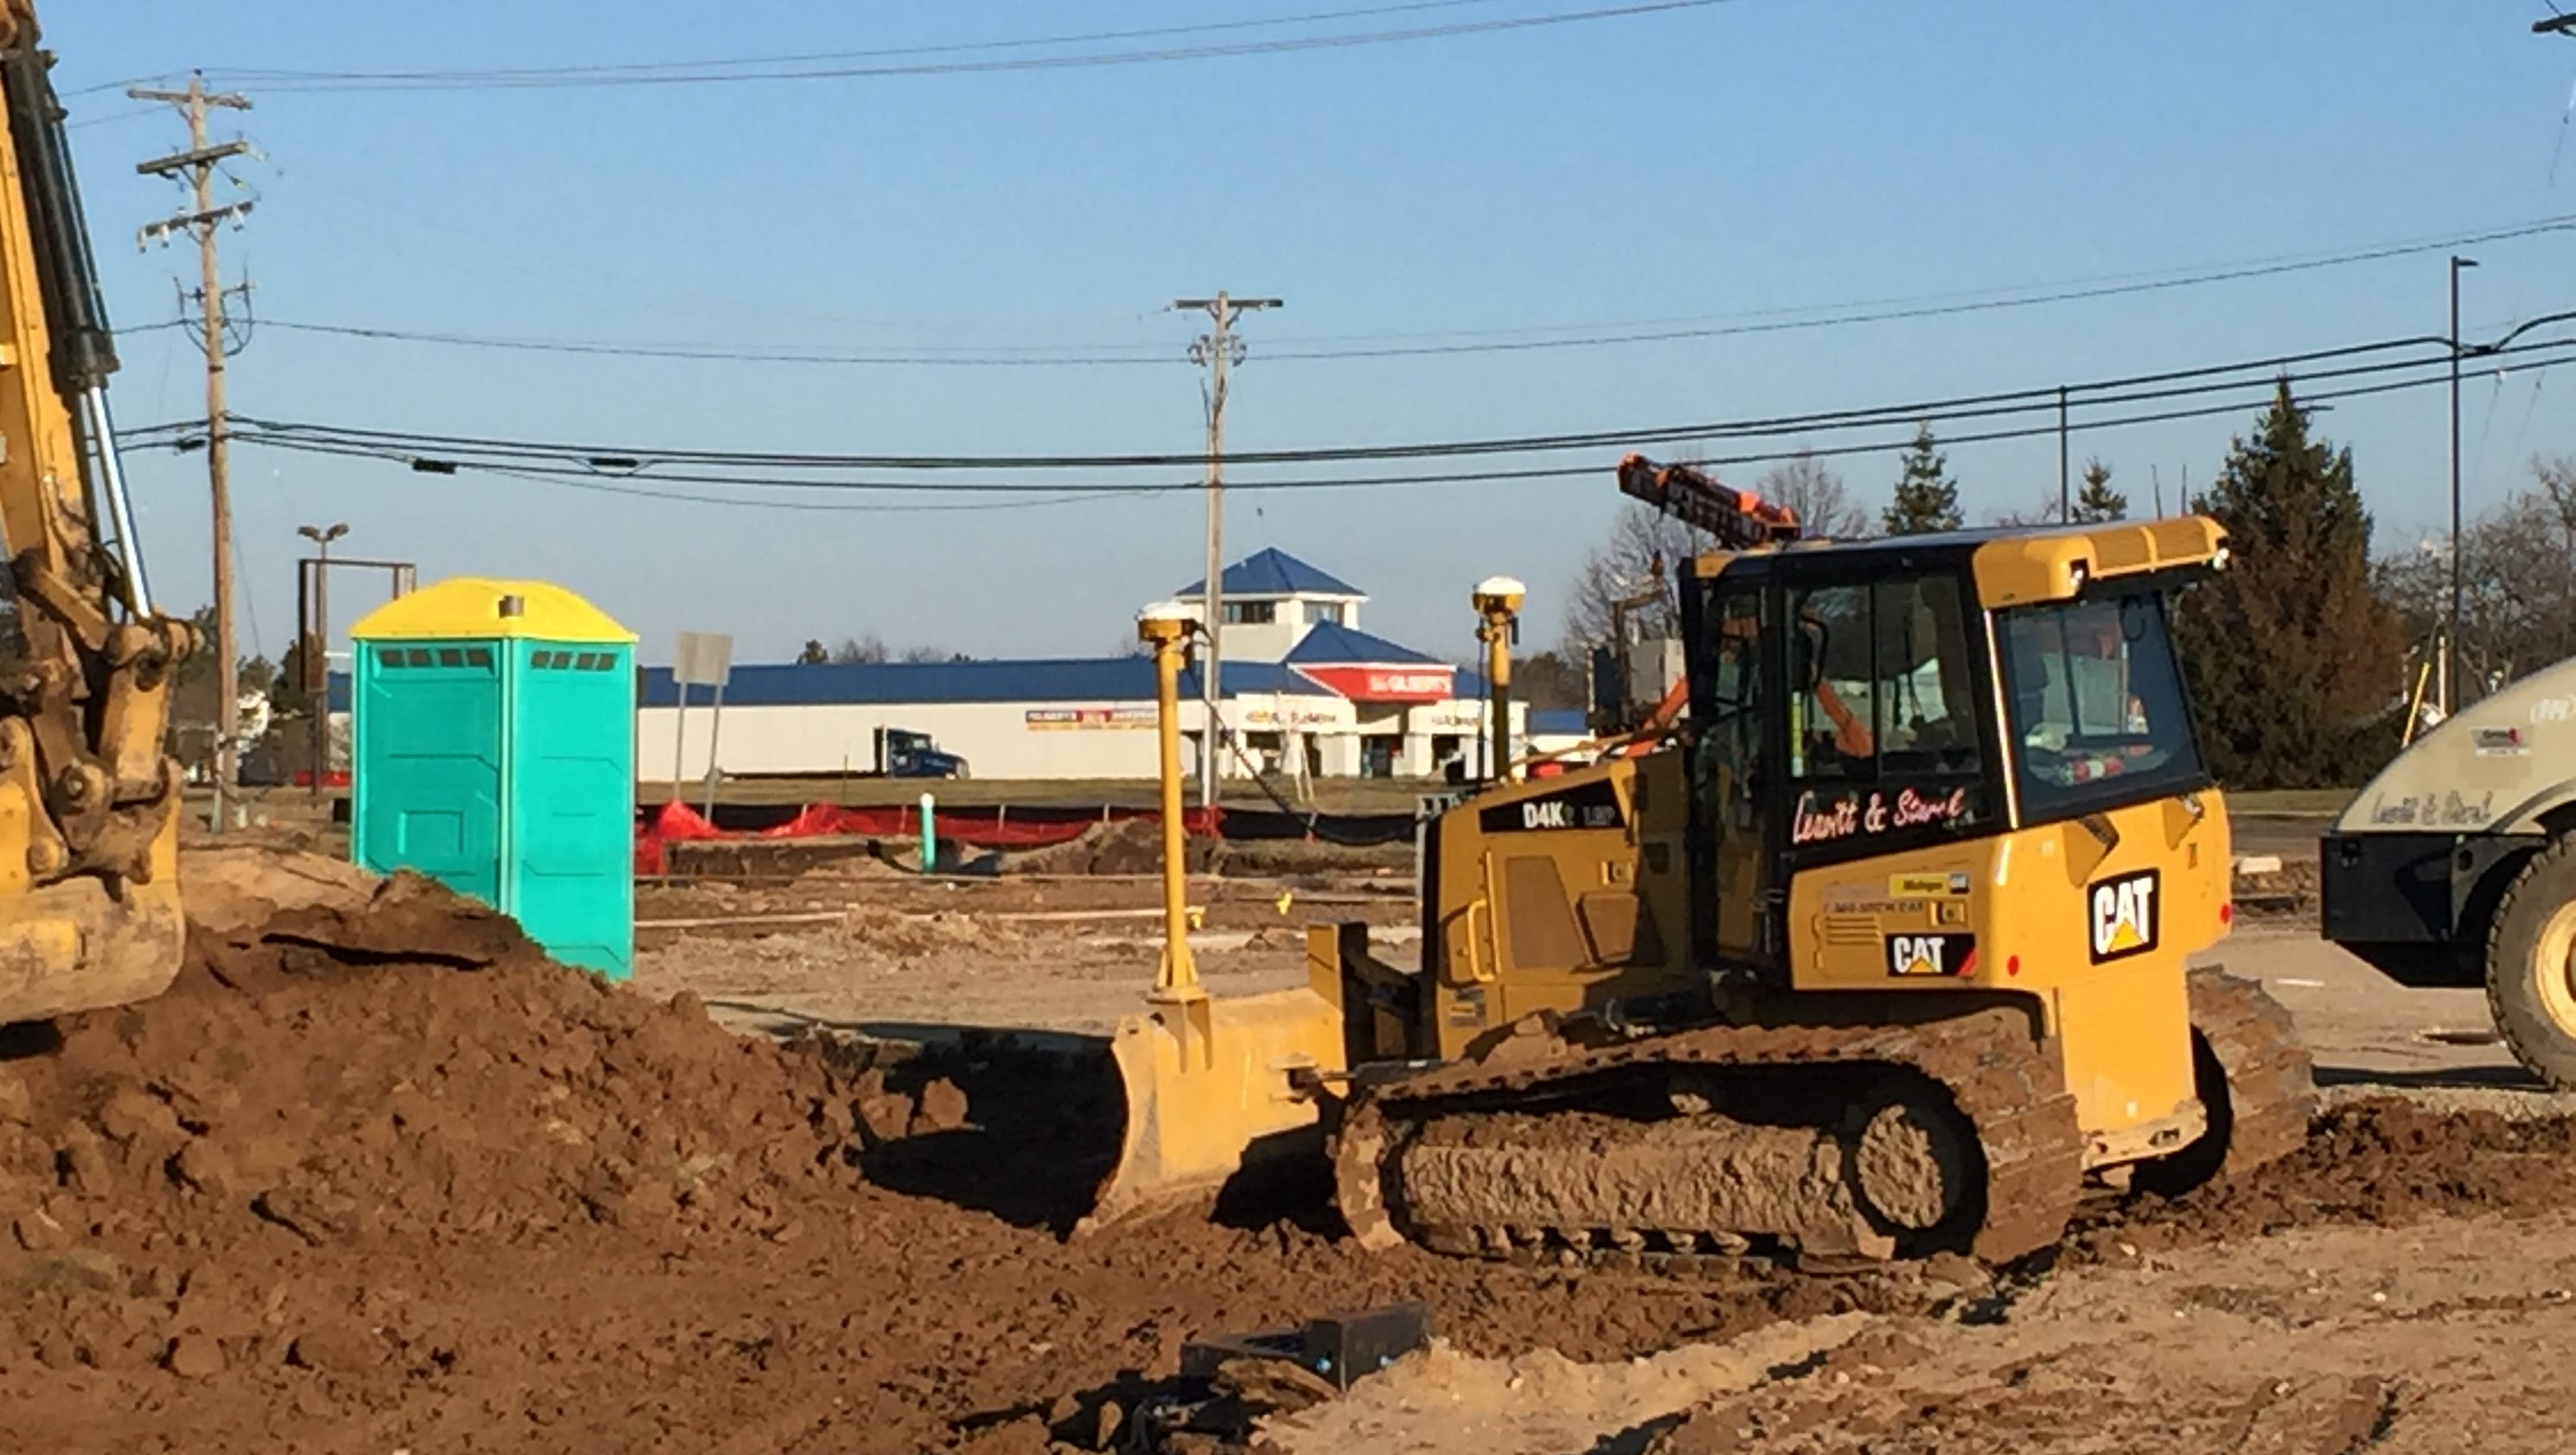 Walgreens, child care center under construction in DeWitt Twp. - Lansing State Journal